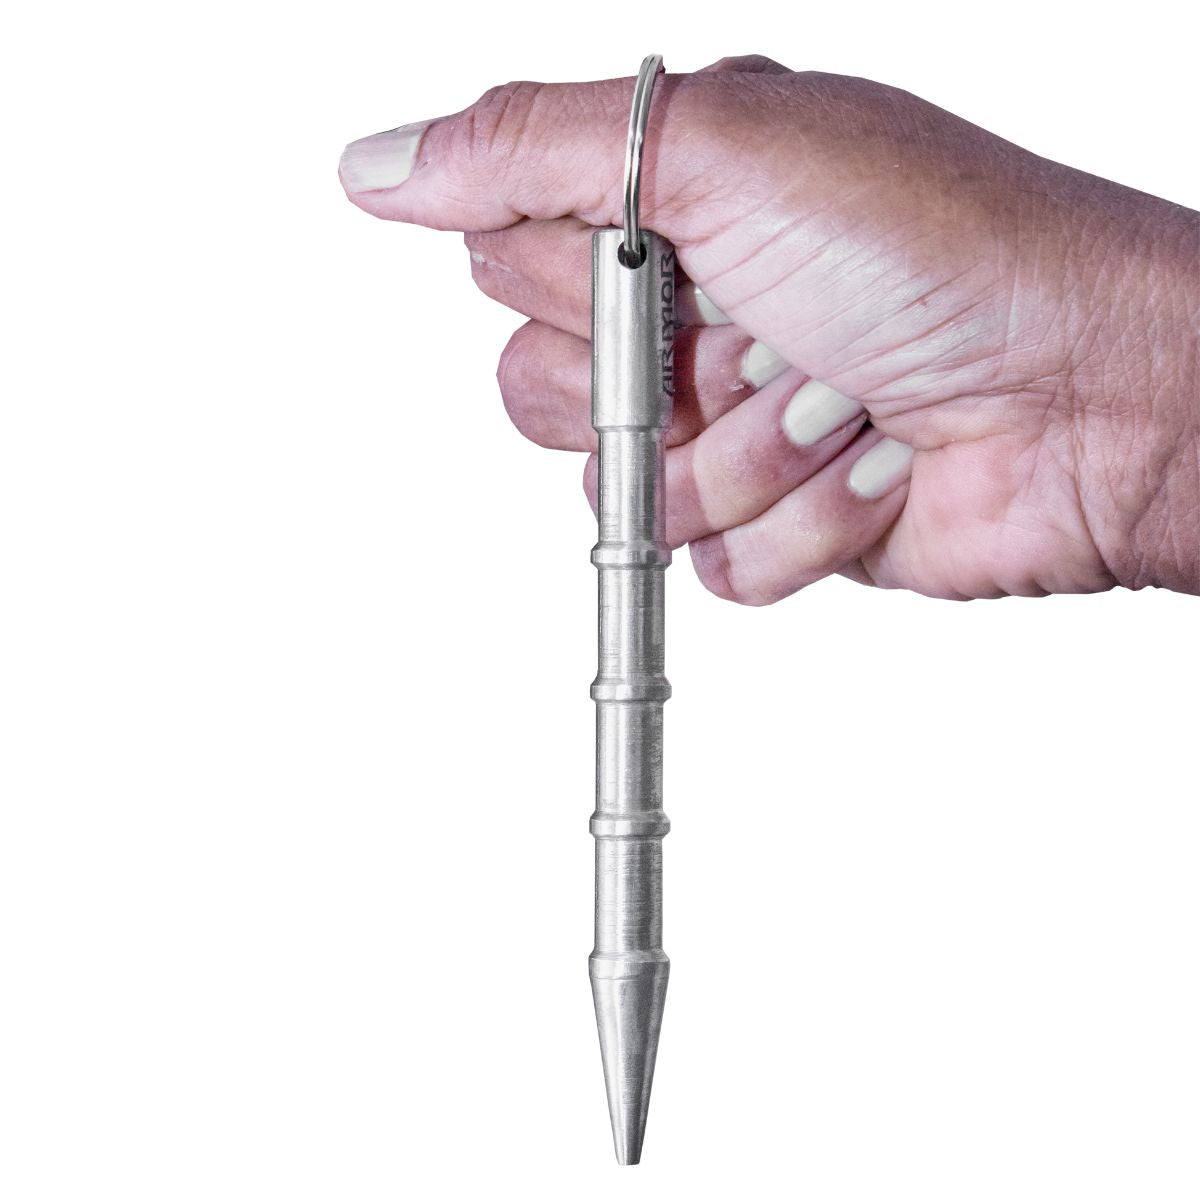 Kubotan Self Defense Keychain Tool - Pointed Tipped - Type B 3